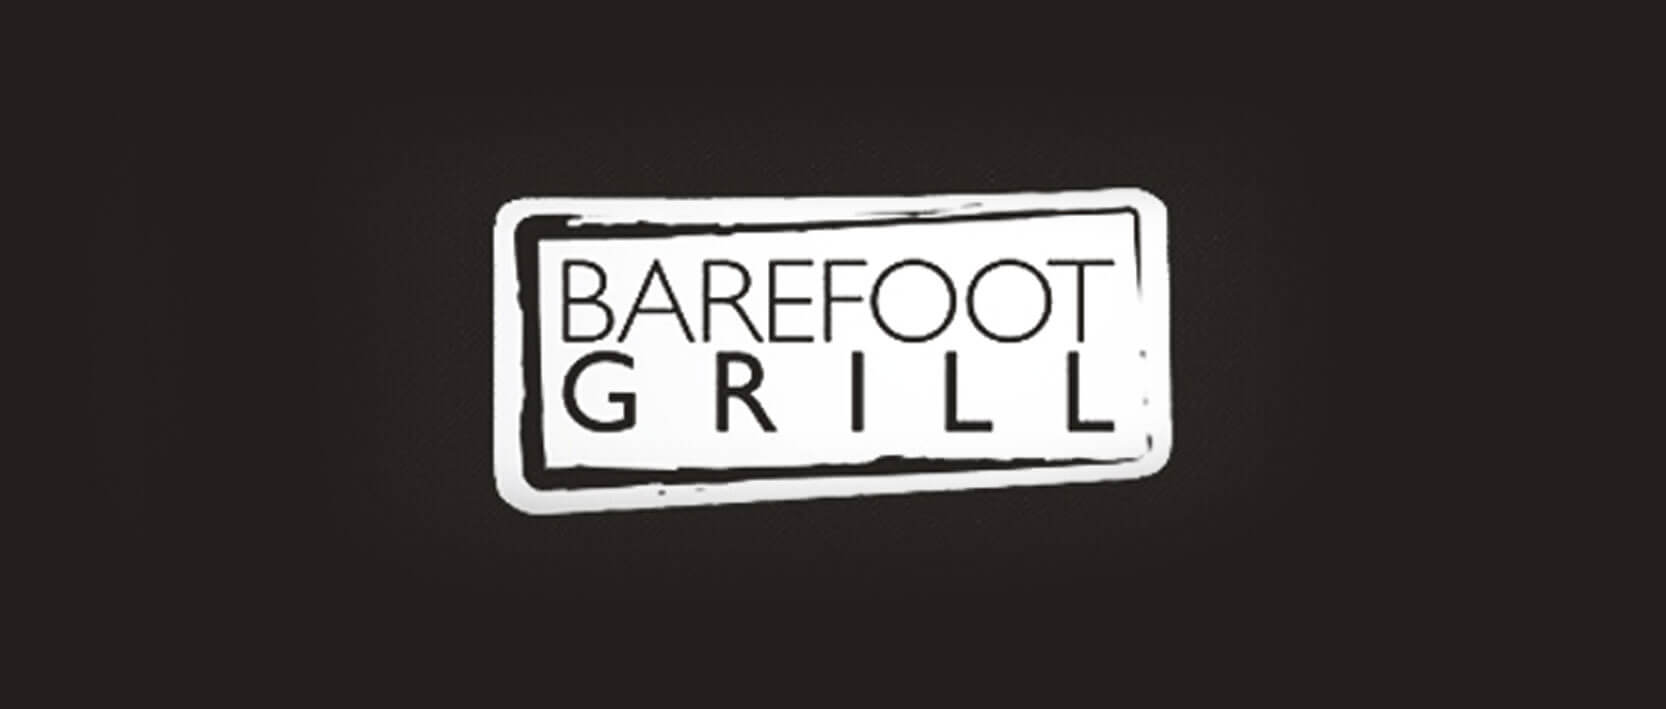 Secrets Huatulco Resort Restaurants and Bars - Barefoot Grill